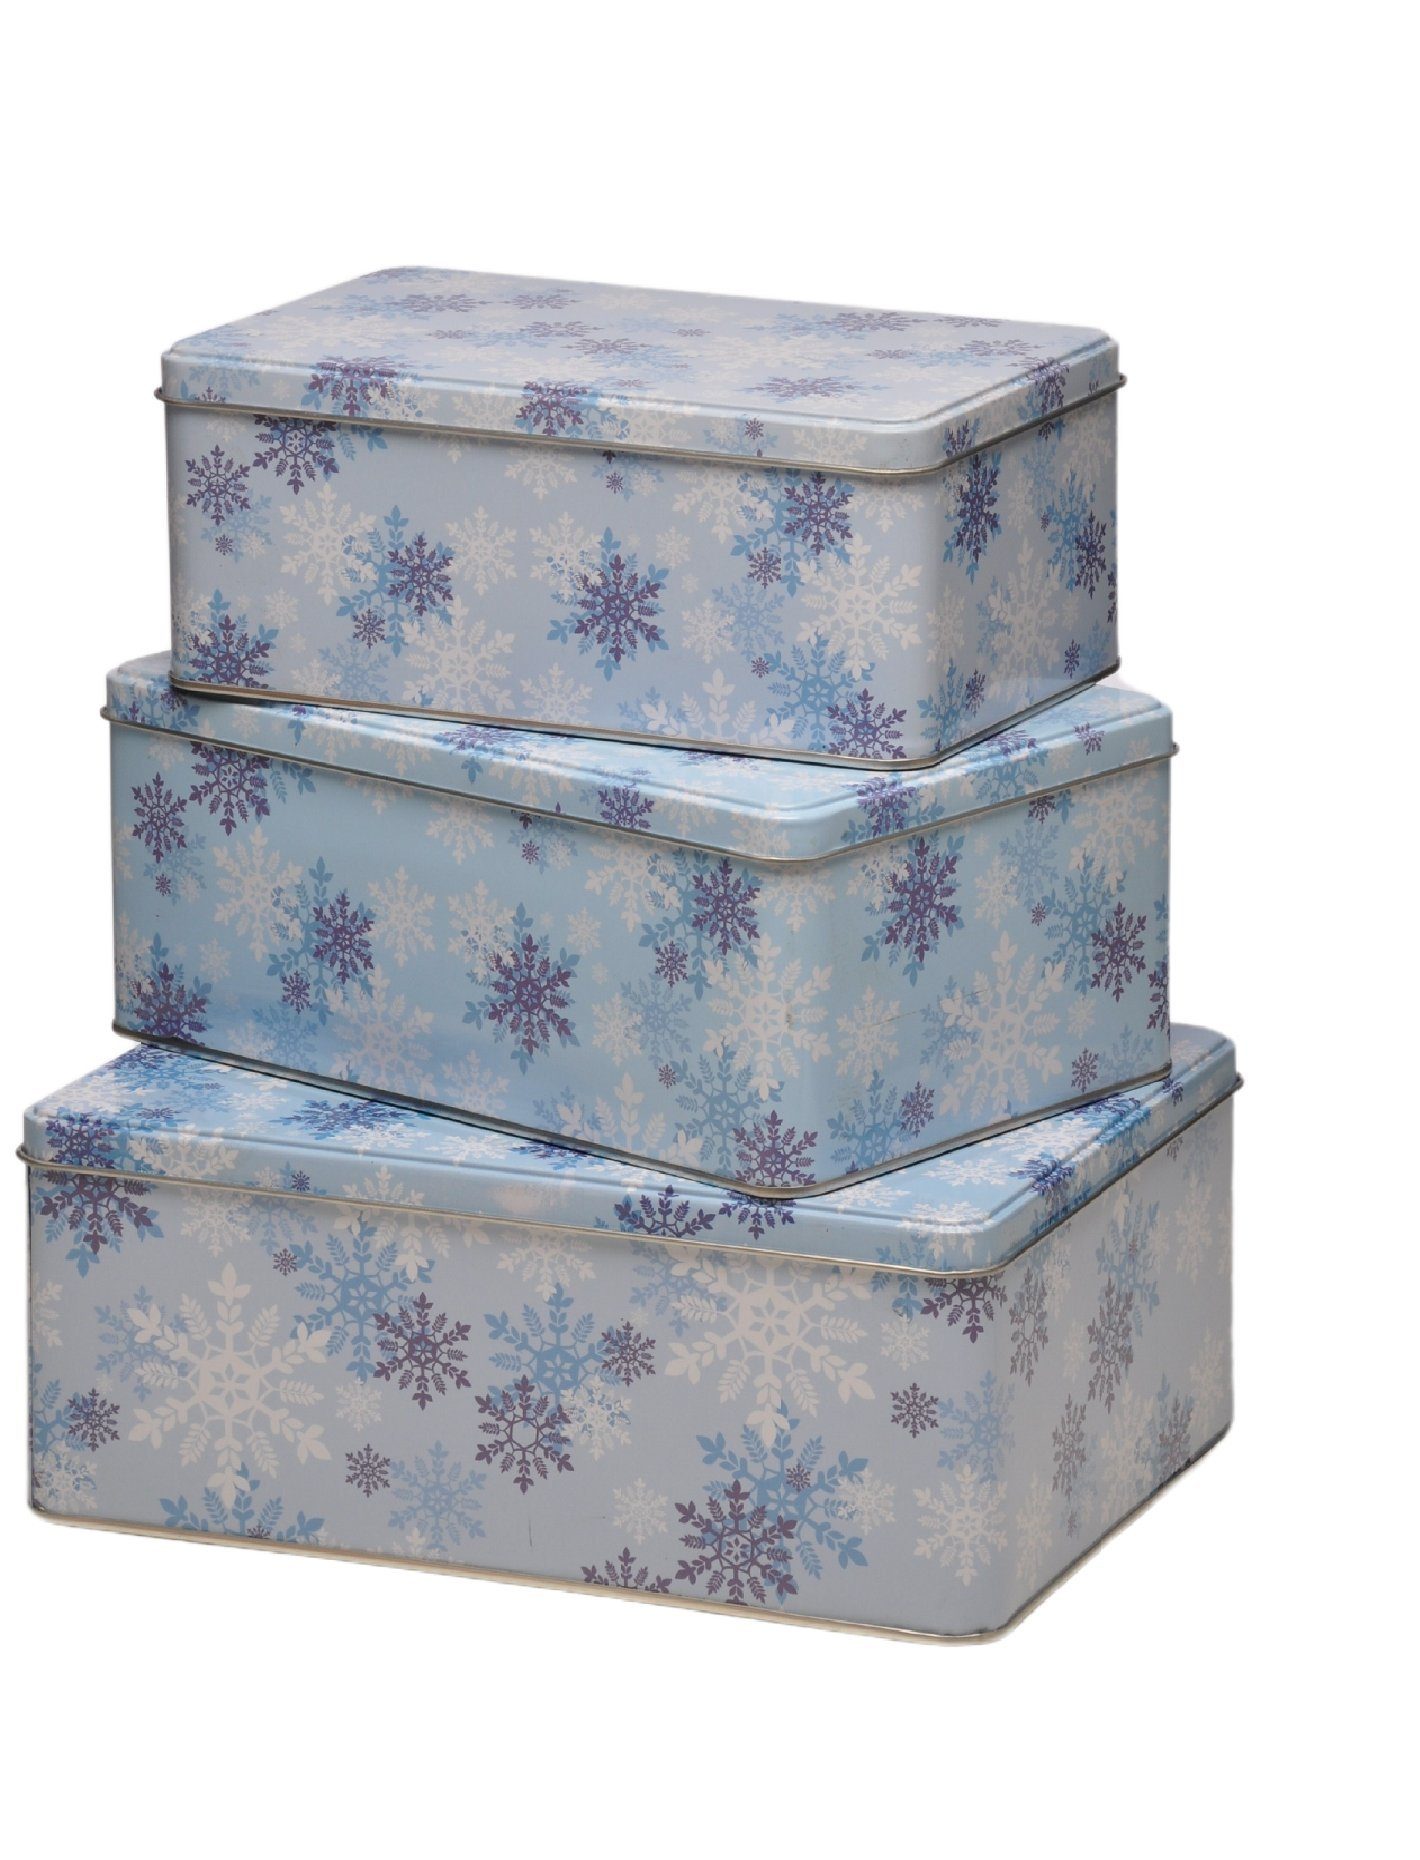 Rungassi Keksdose Weihnachts-Keksdosen Plätzchendosen Dosen 3er Set rechteckig Farbe: Hellblau | Keksdosen